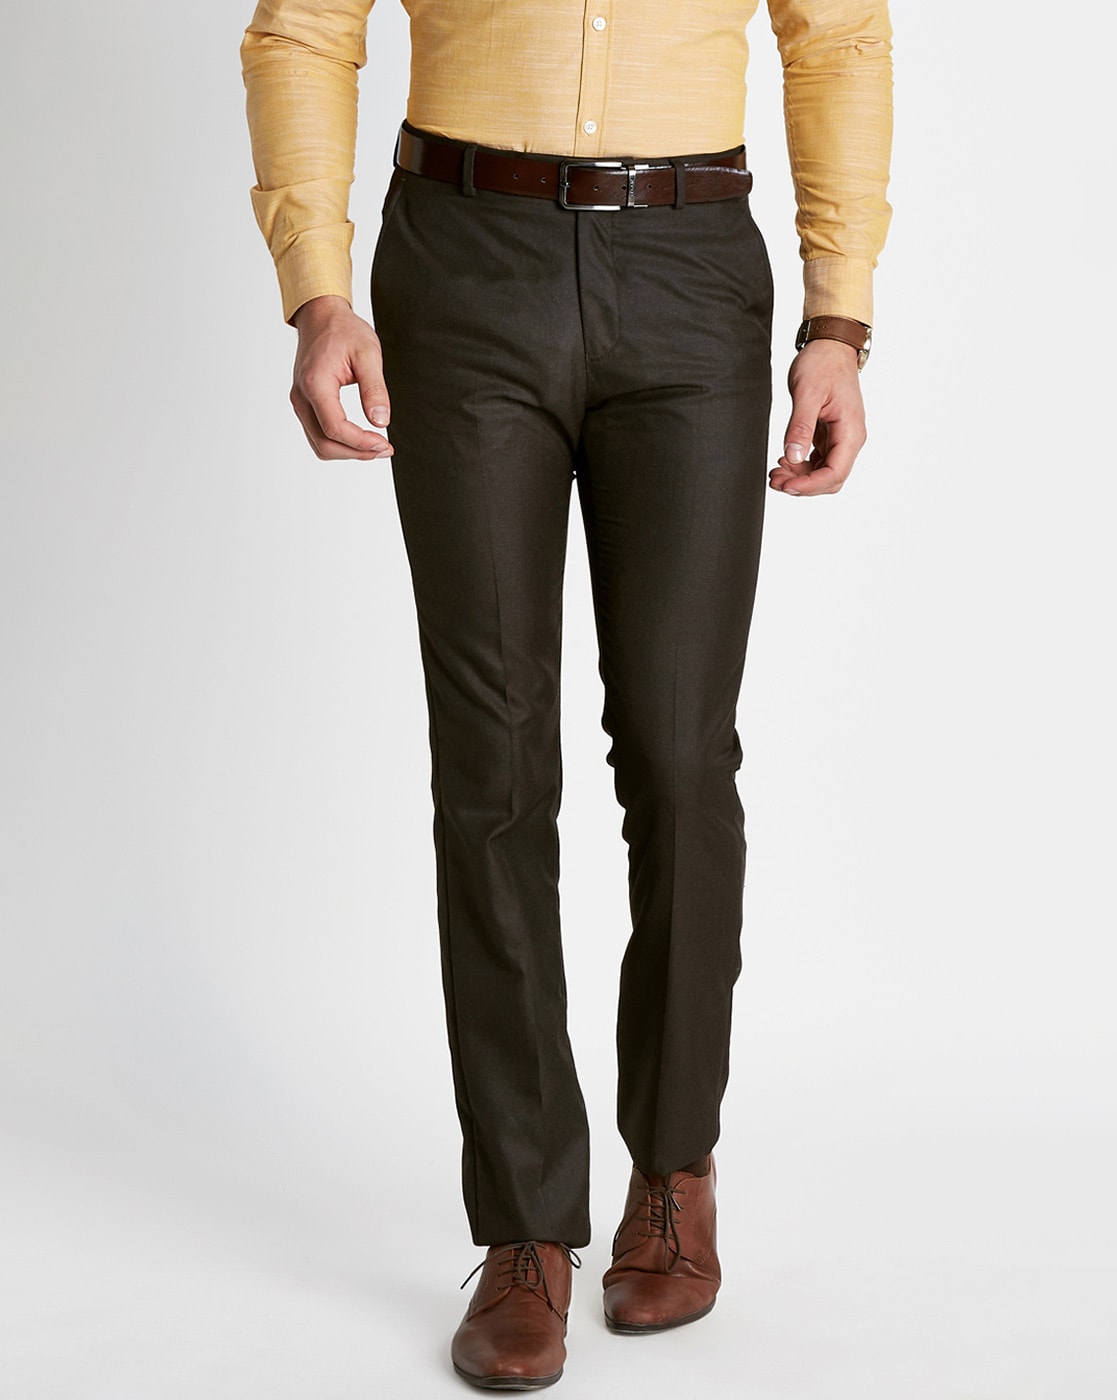 Richard Parker by Pantaloons Black Slim Fit Trousers